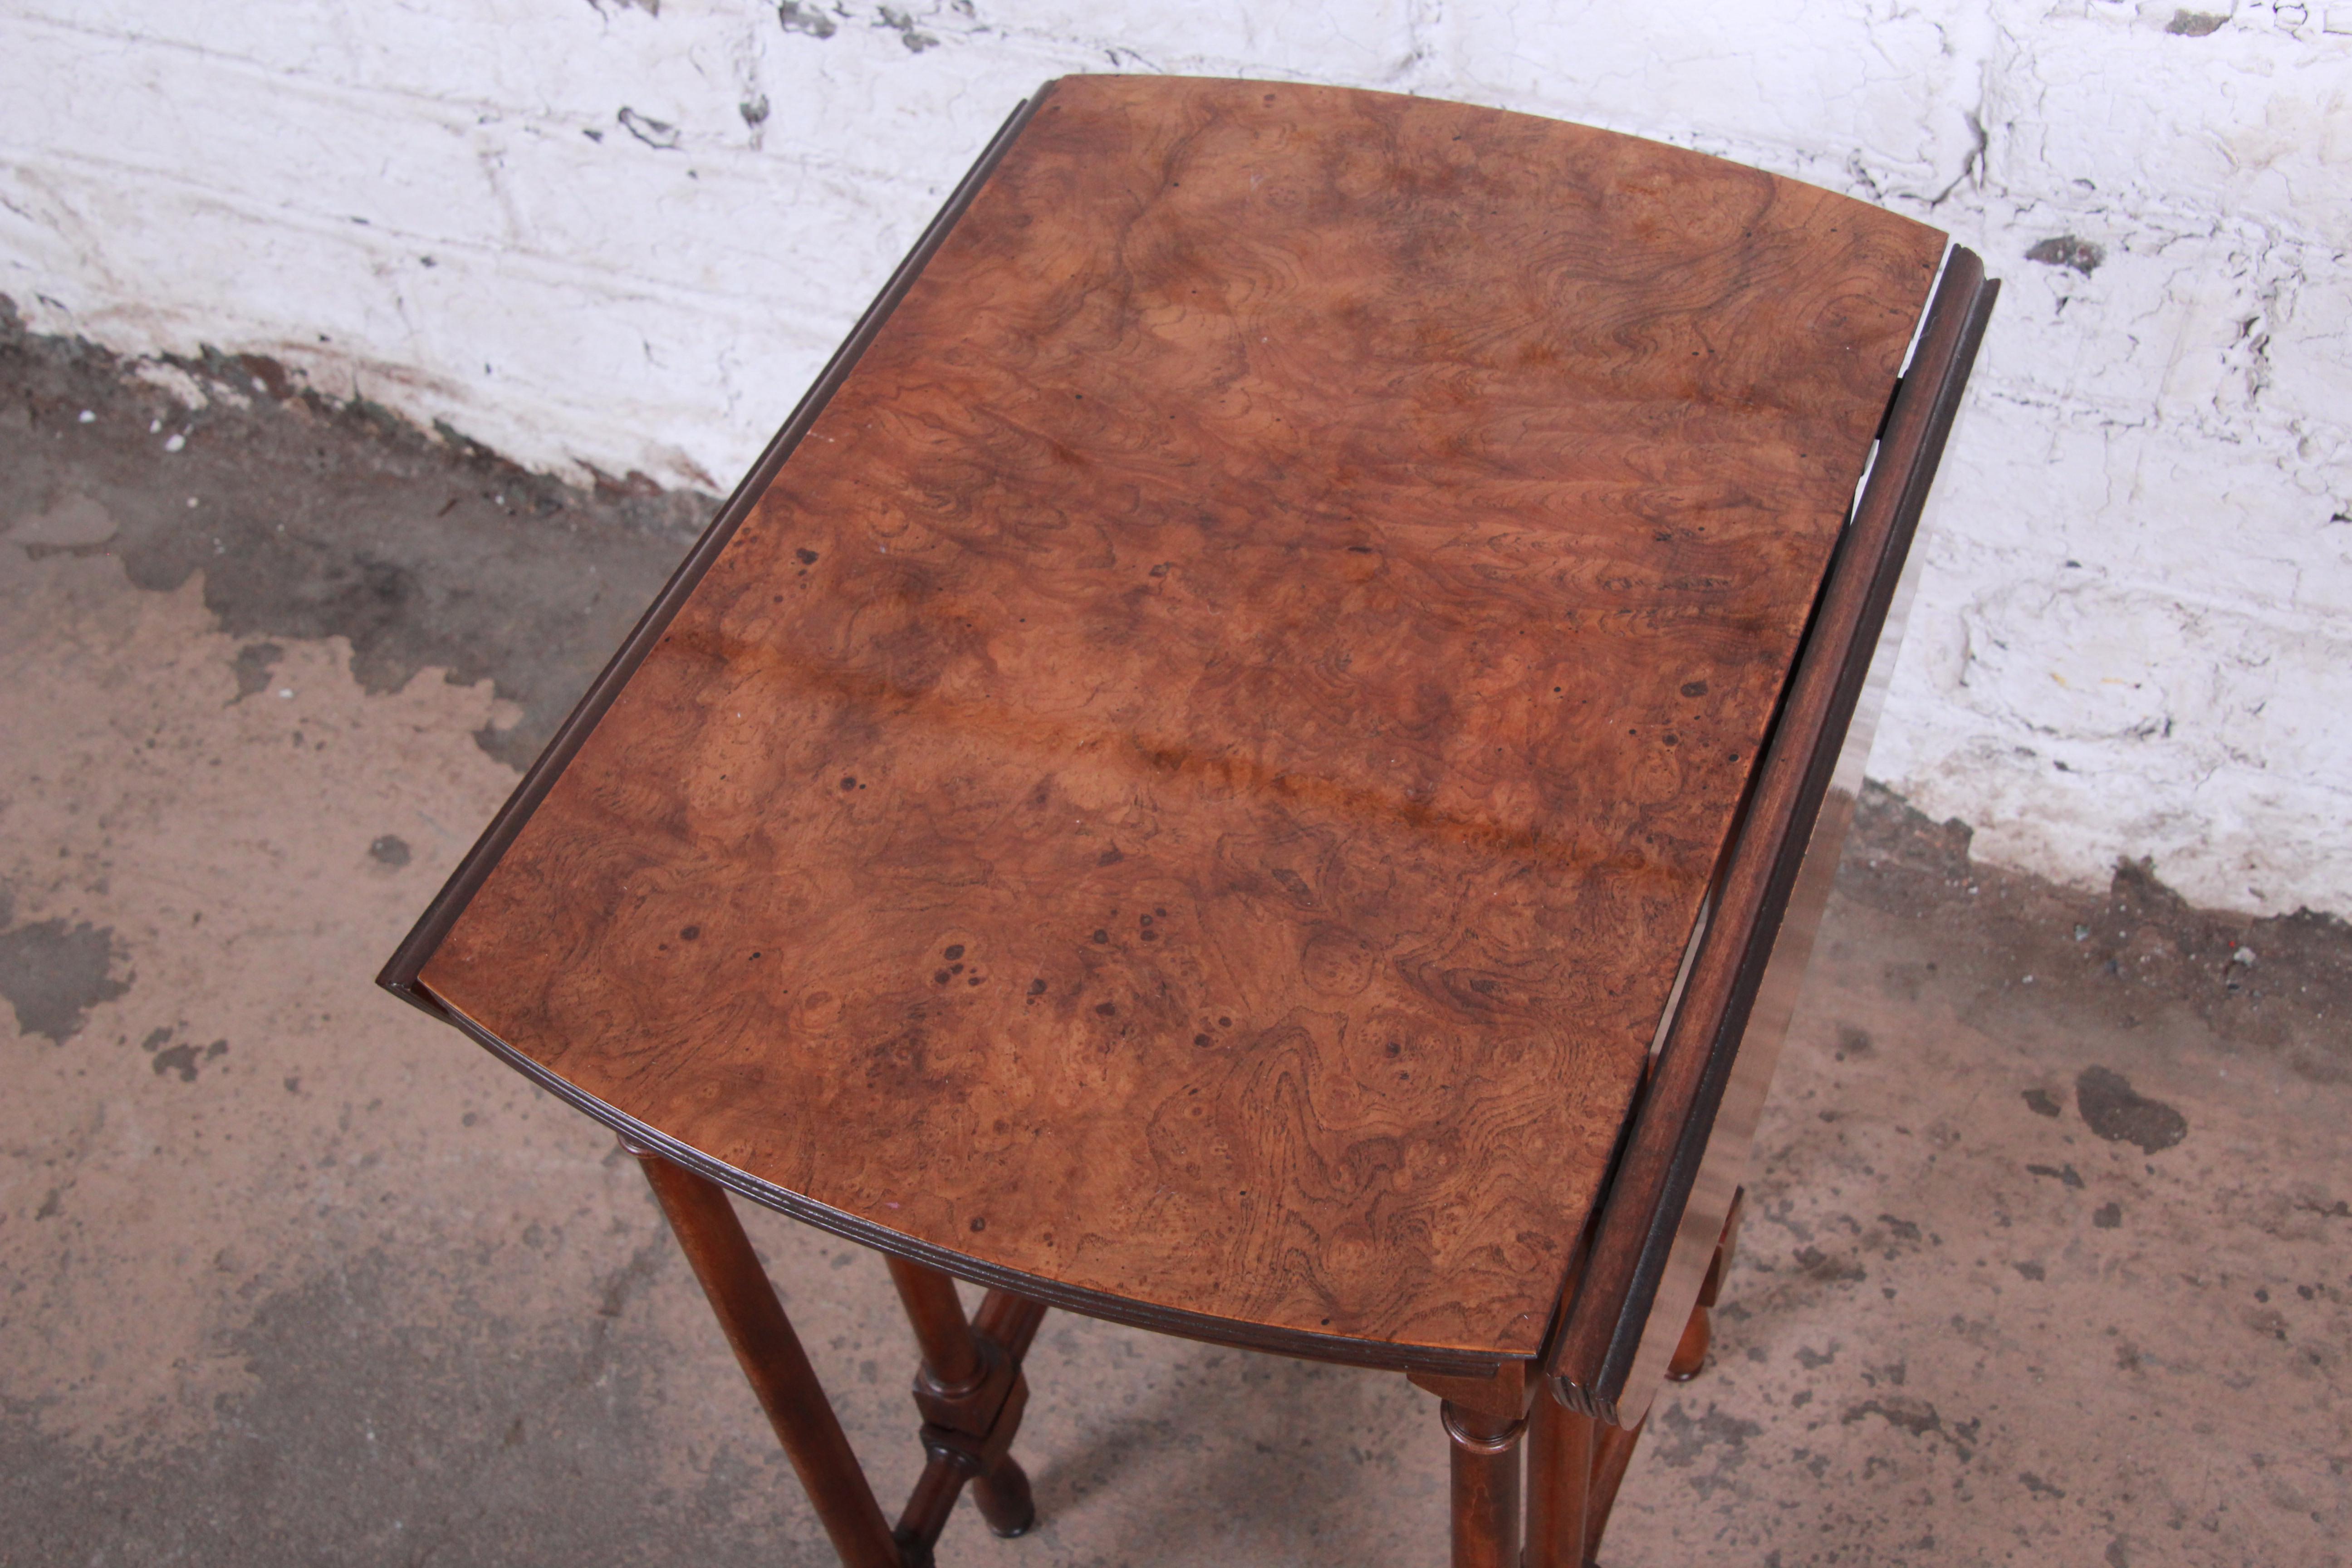 British Colonial Baker Furniture Burled Walnut Gate Leg Drop Leaf Side Table